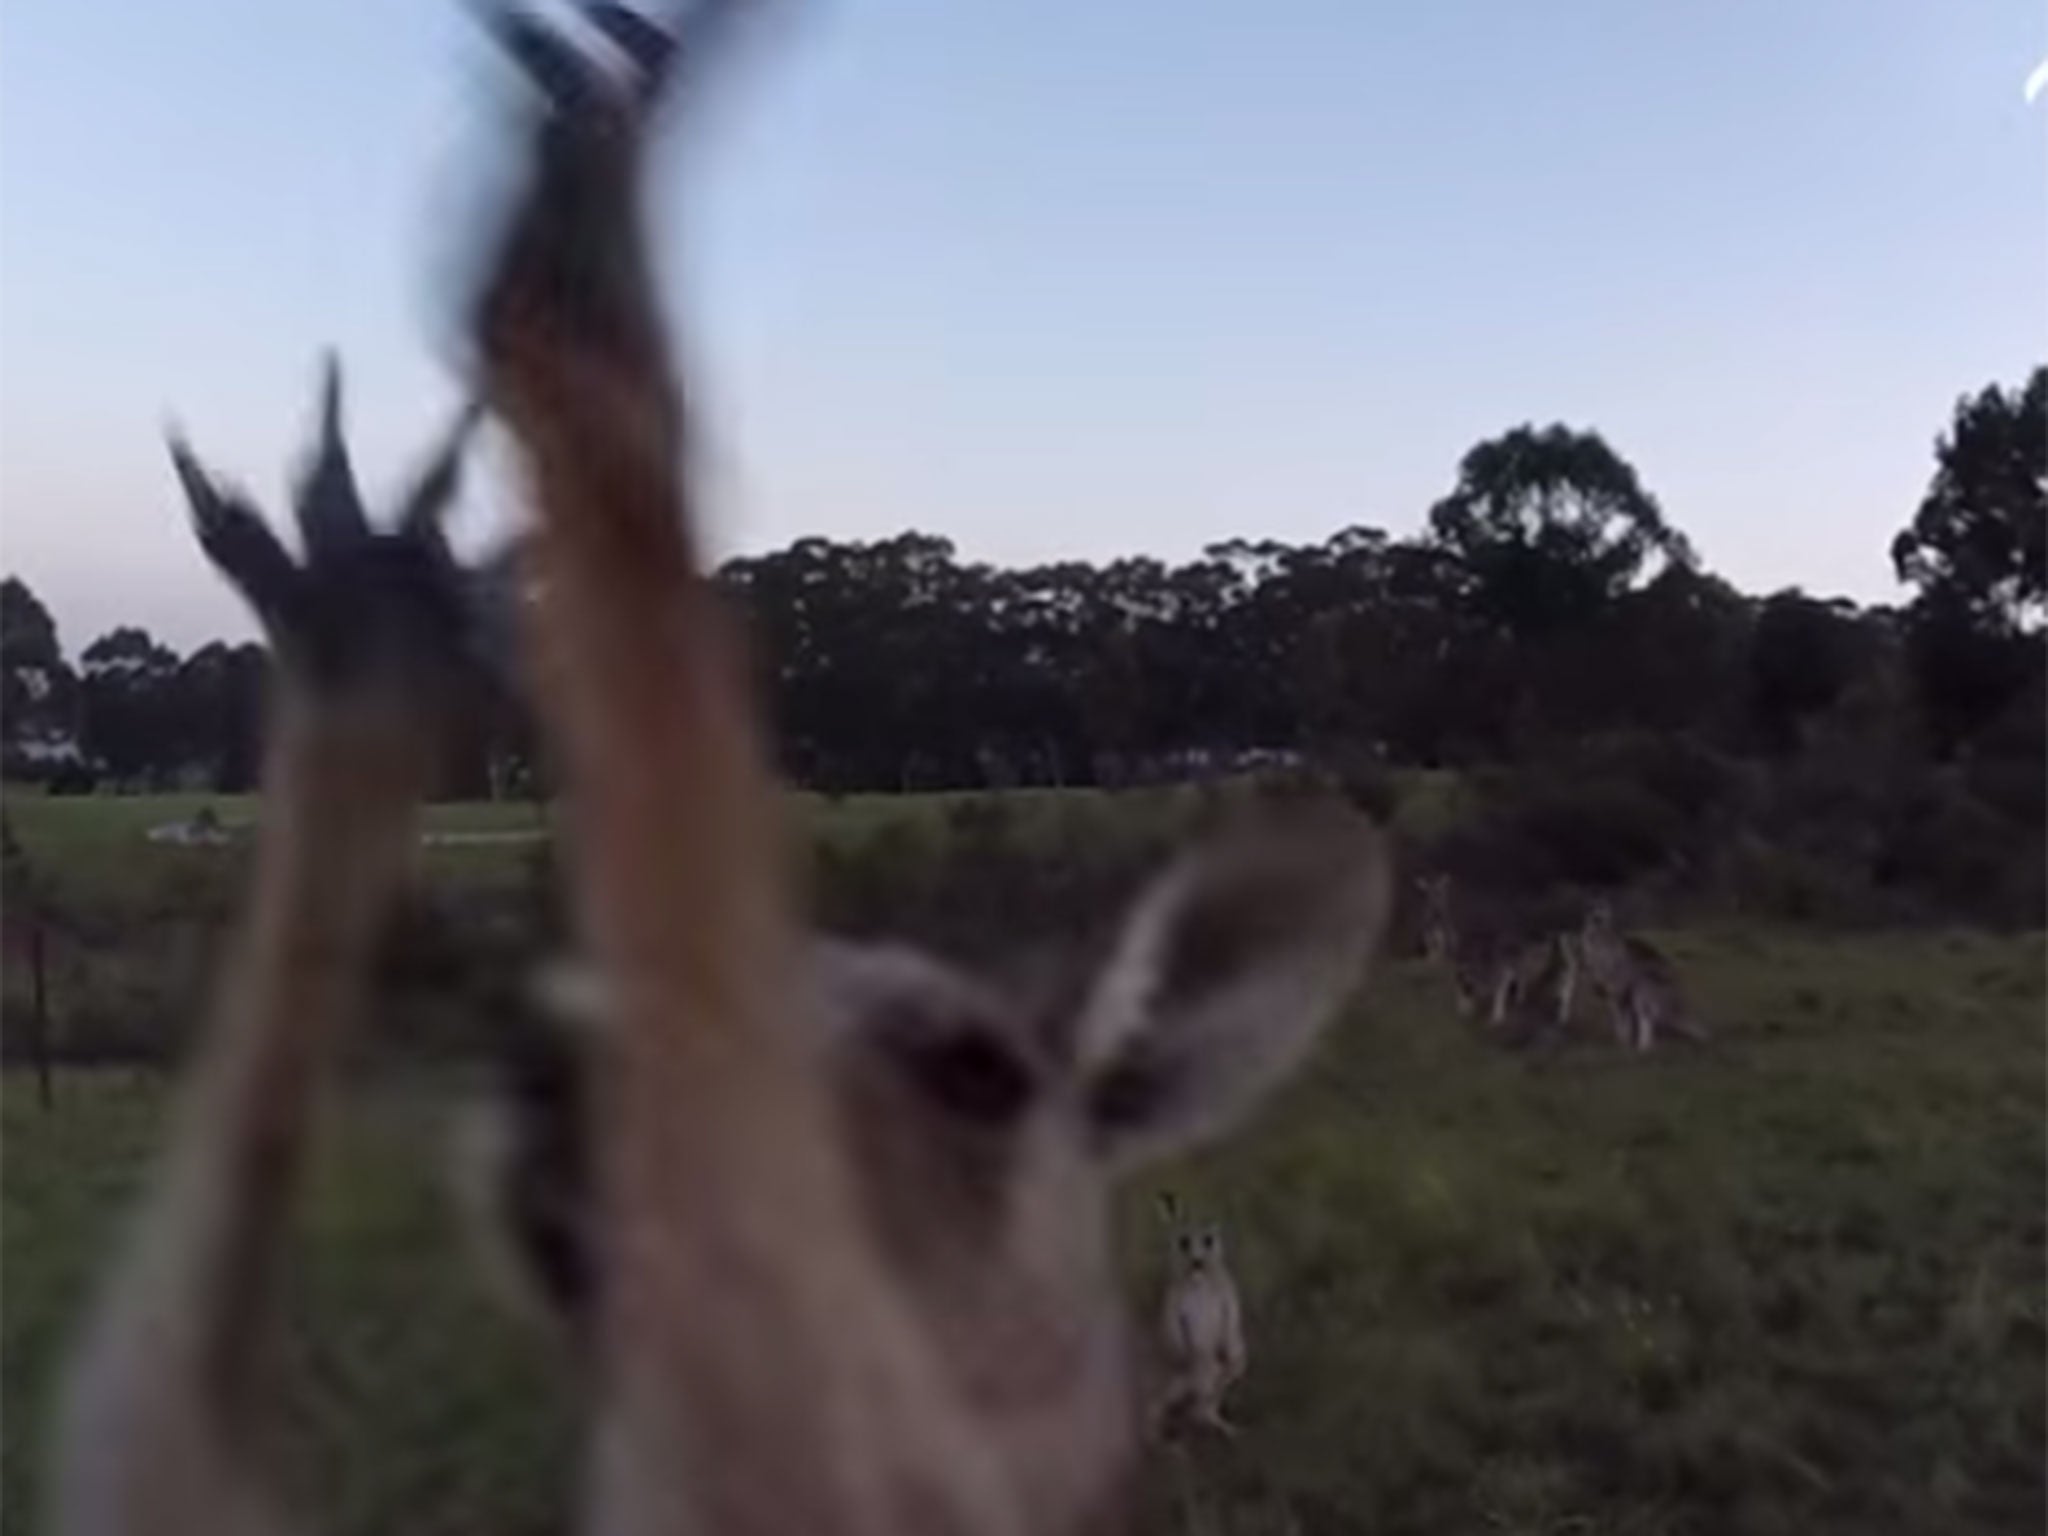 Kangaroo fights drone and wins.